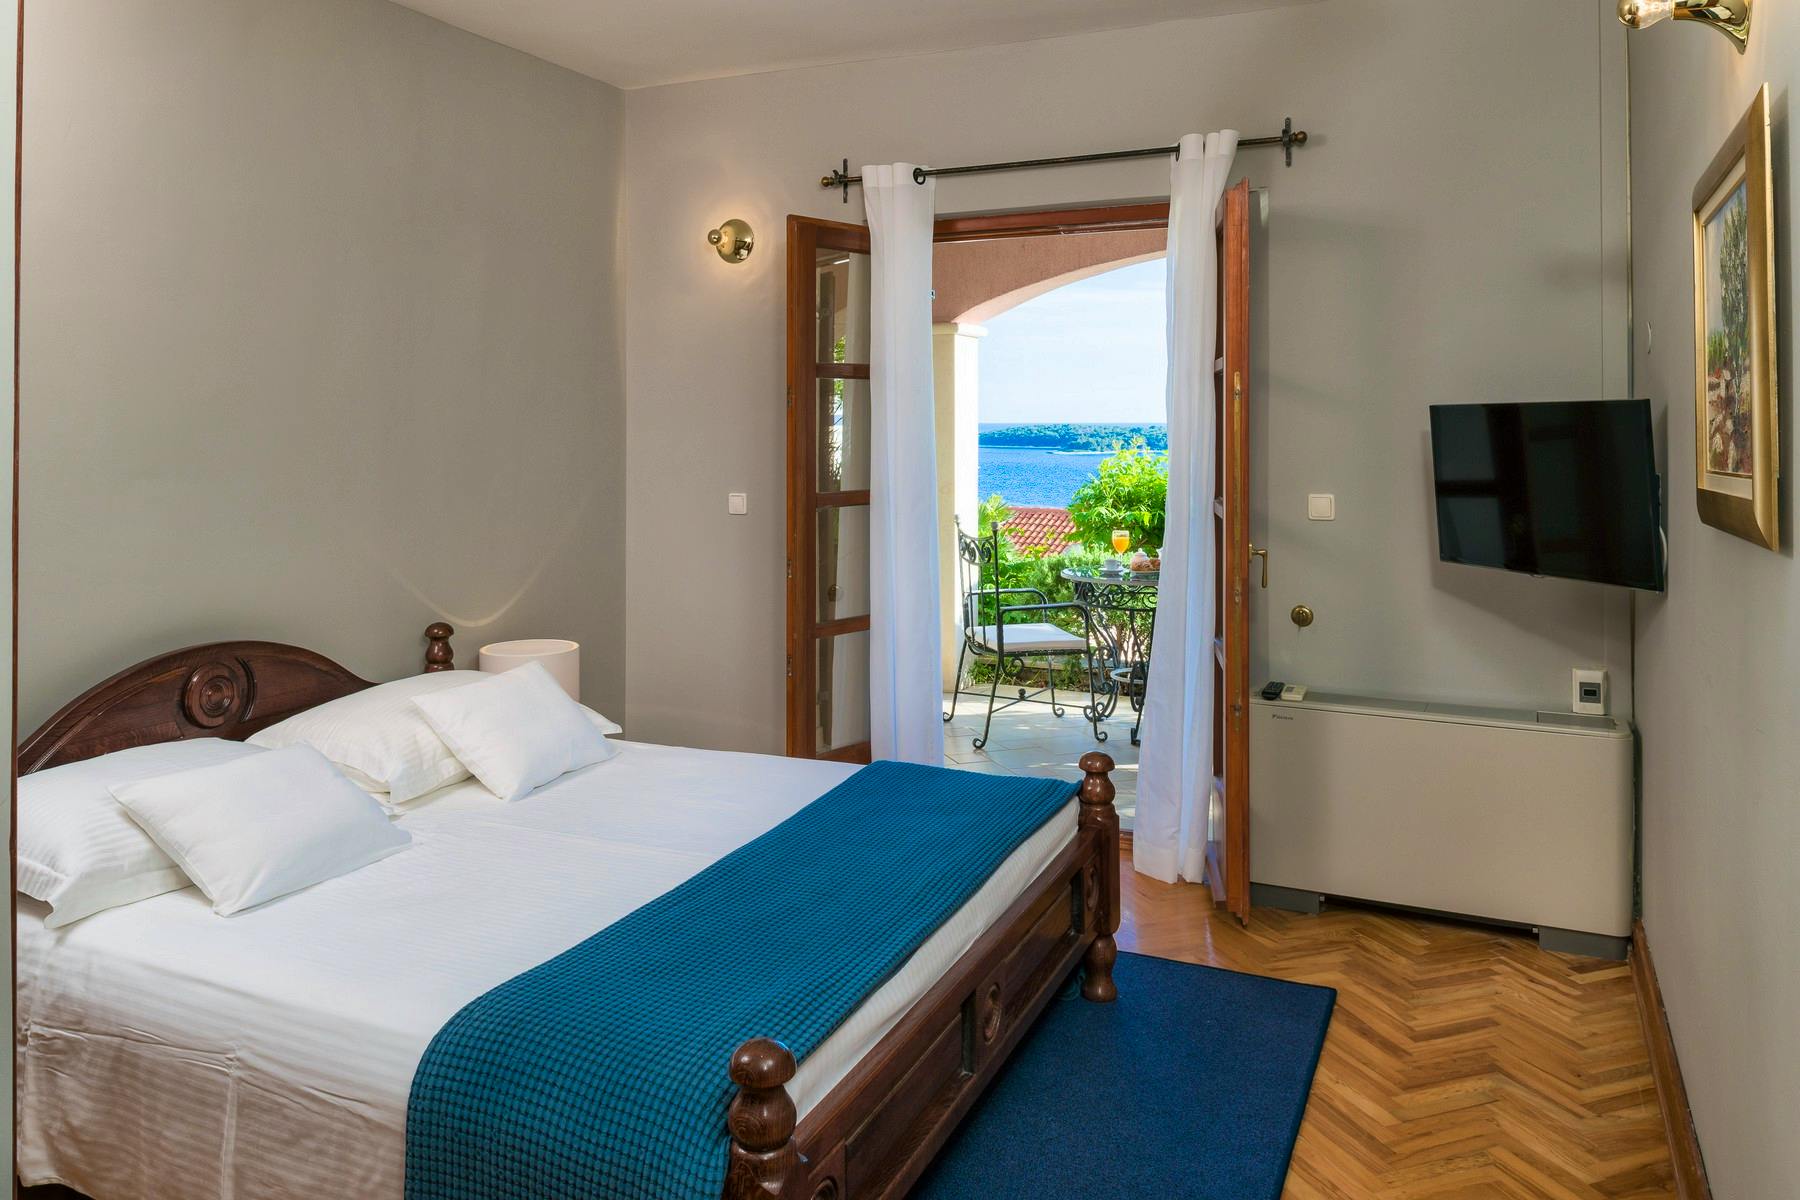 Luxury ensuite bedroom with sea view